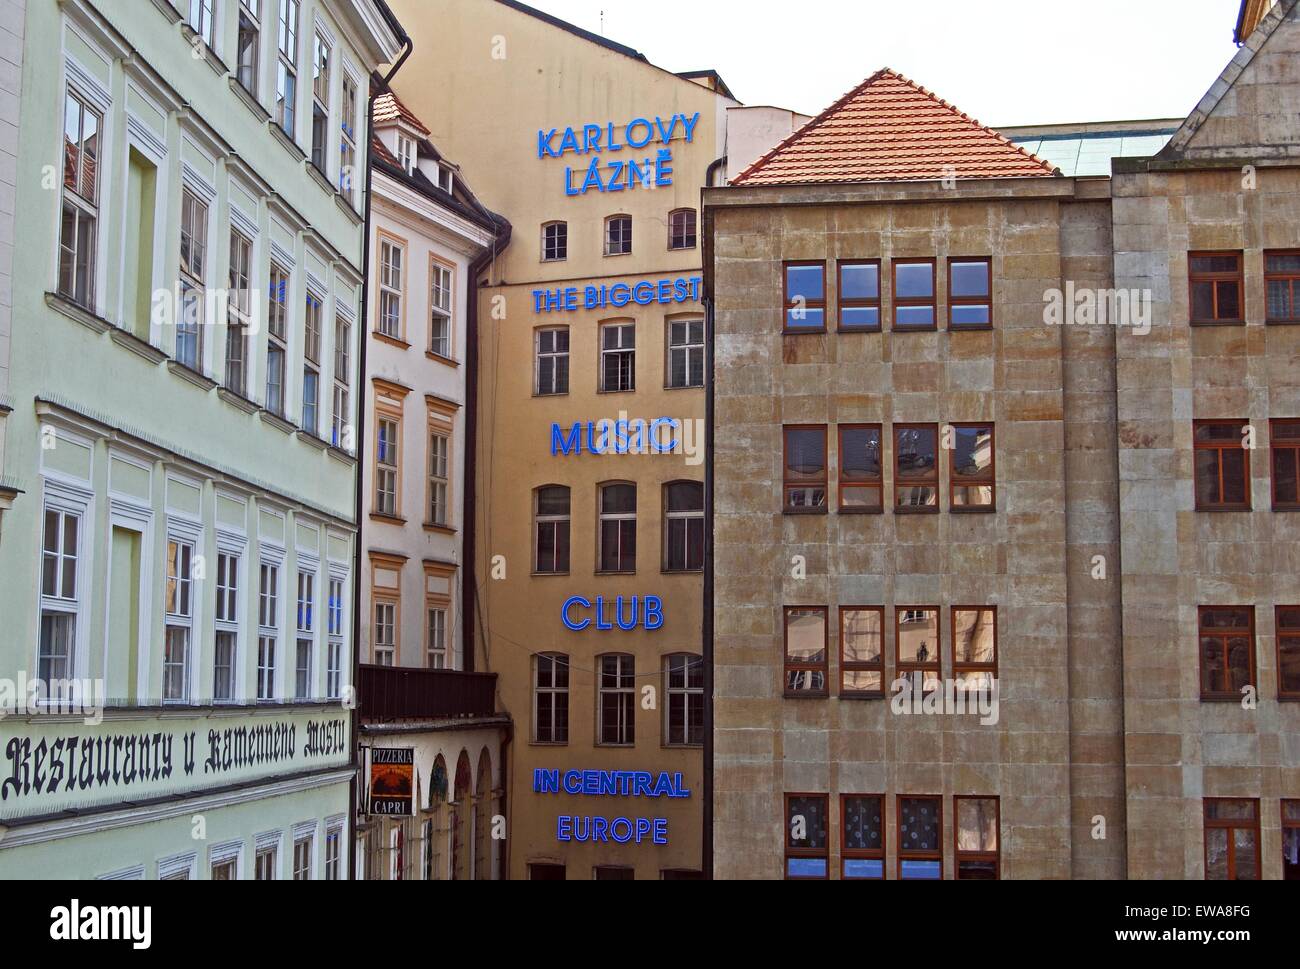 Karlovy lazne prague hi-res stock photography and images - Alamy